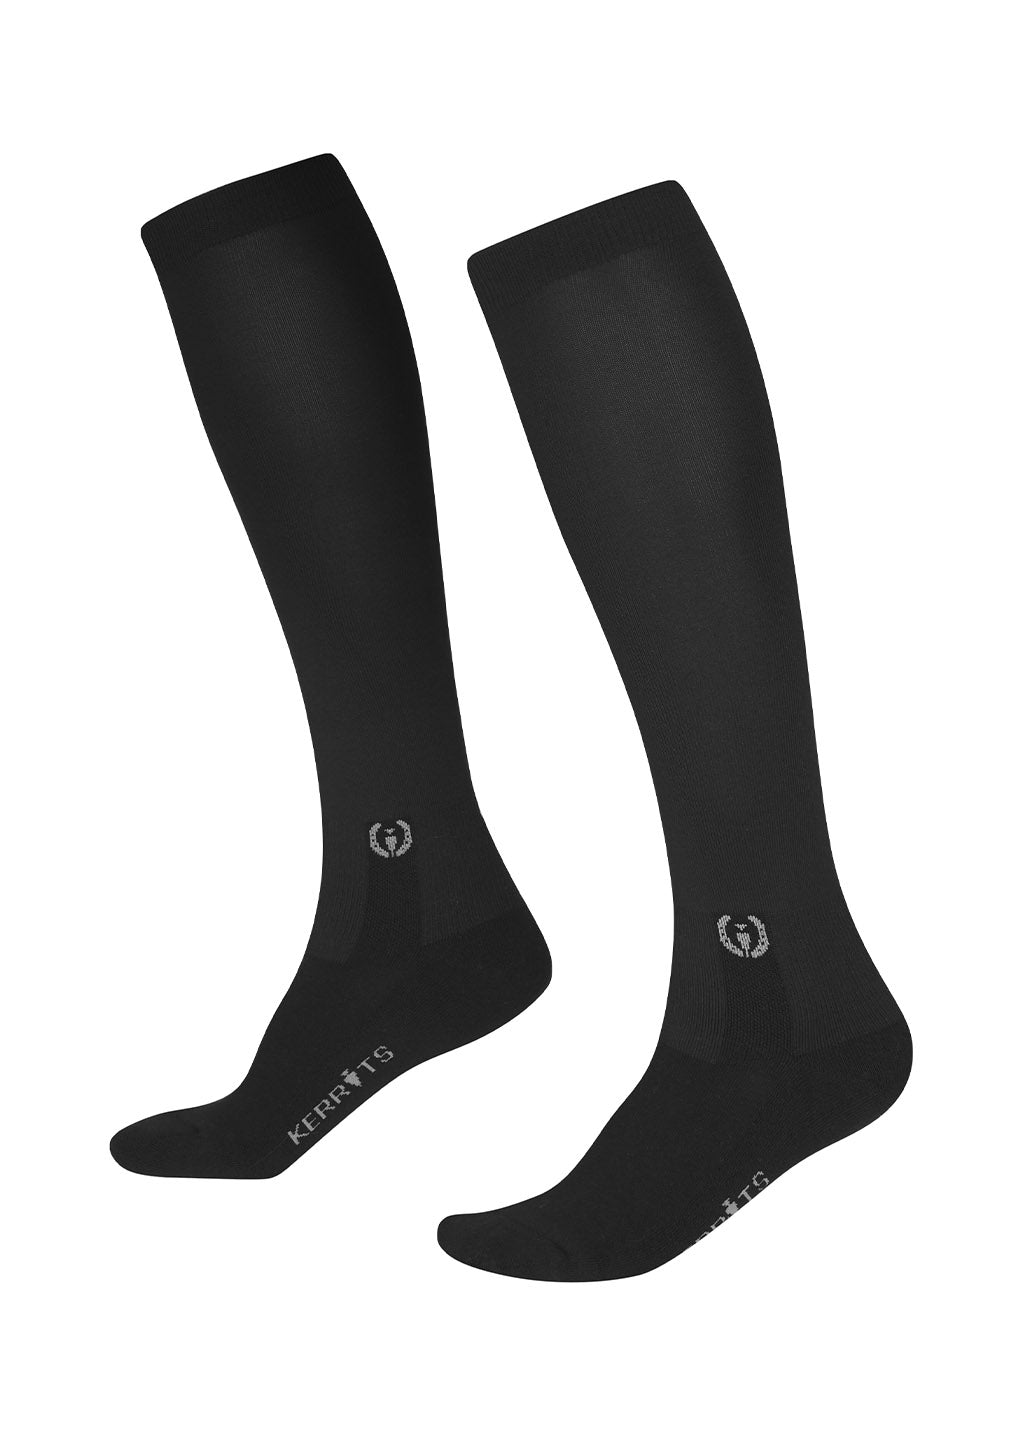 Kerrits Dual Zone Boot Socks - Solid